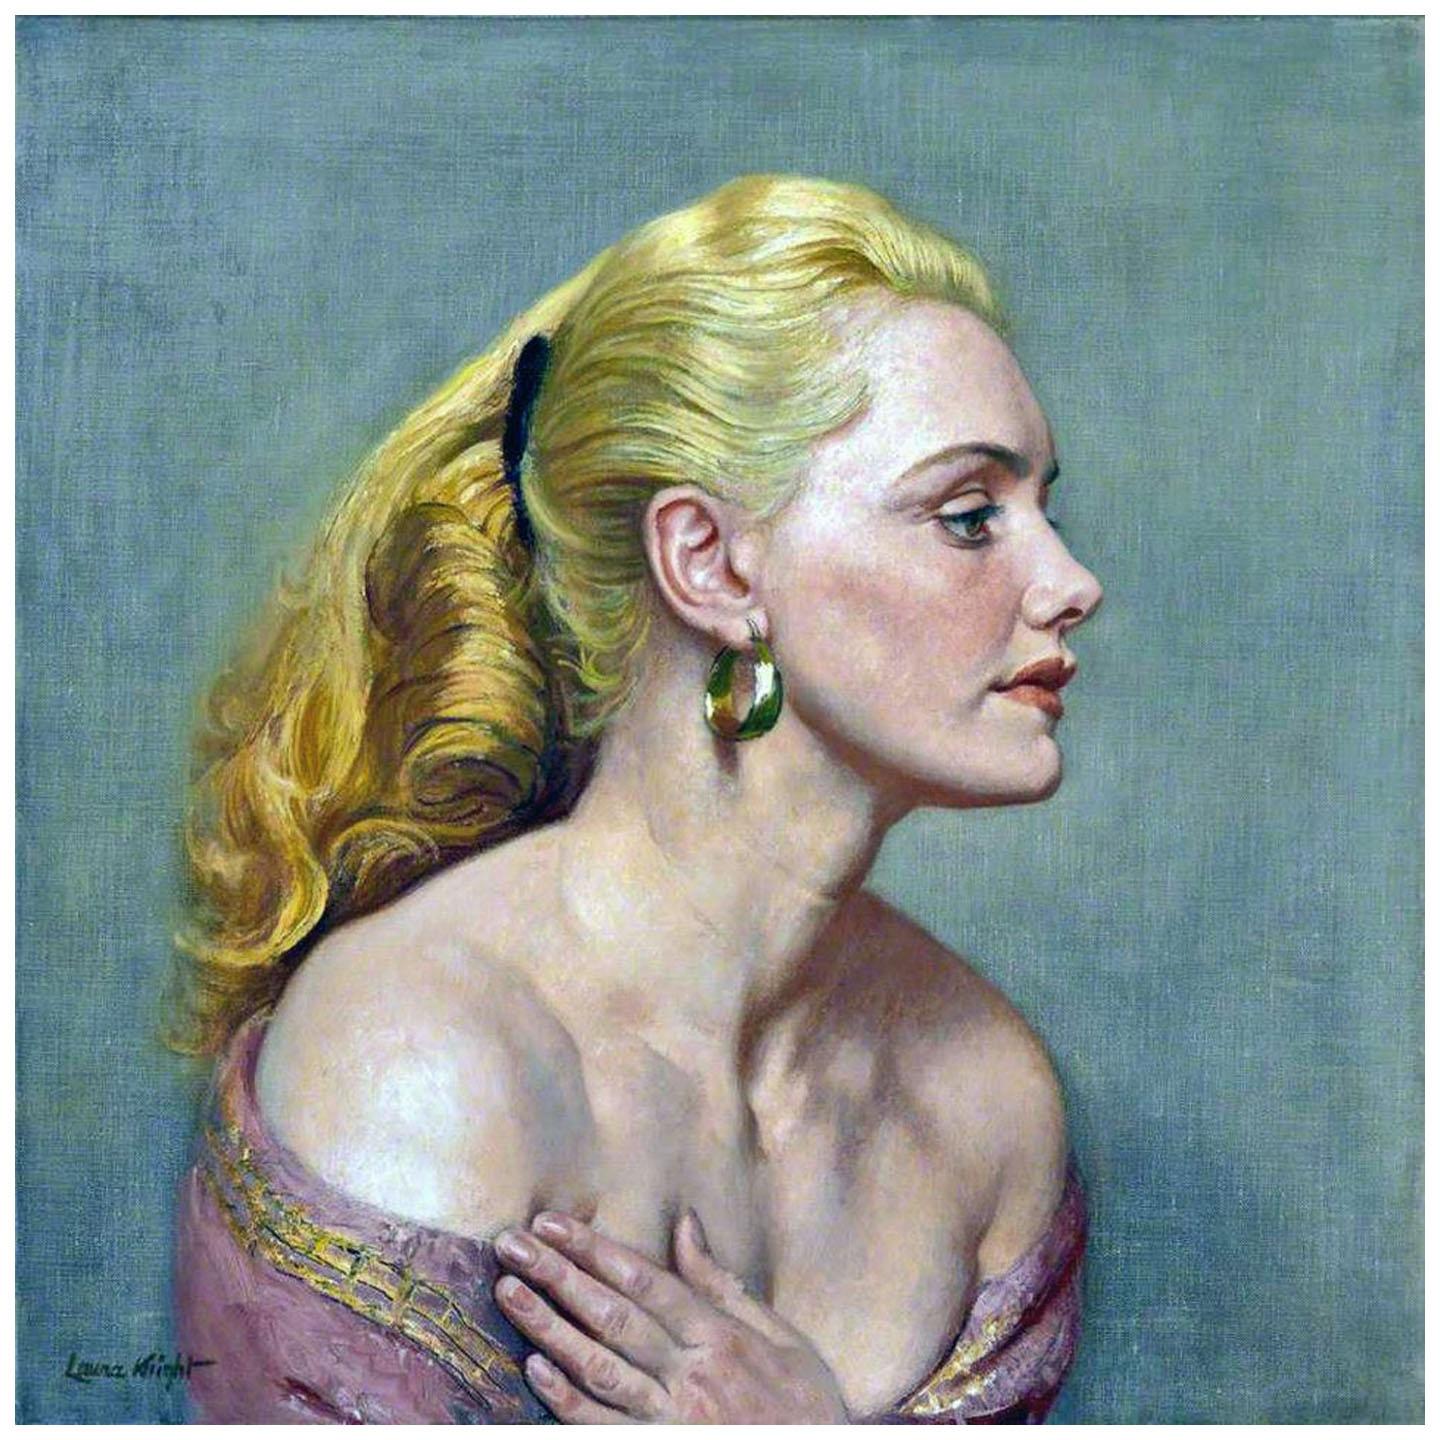 Laura Knight. Joan Rhodes. 1955. Royal Academy London